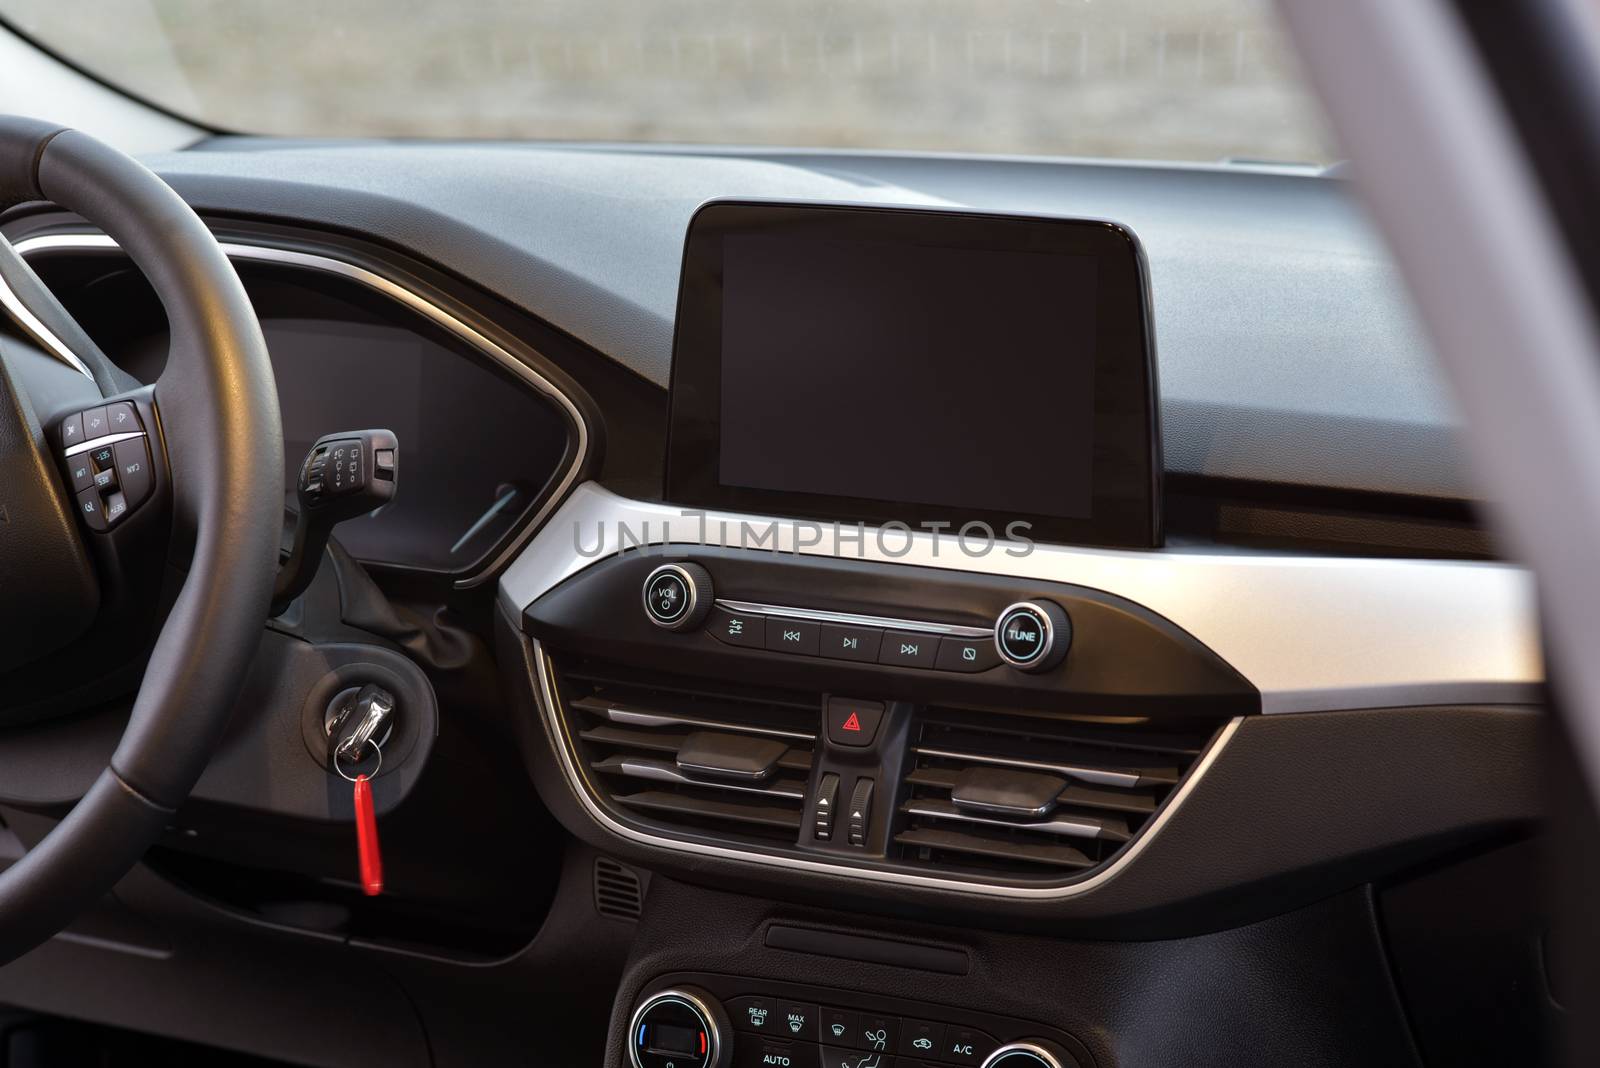 Screen multimedia system on dashboard in a modern car by aselsa